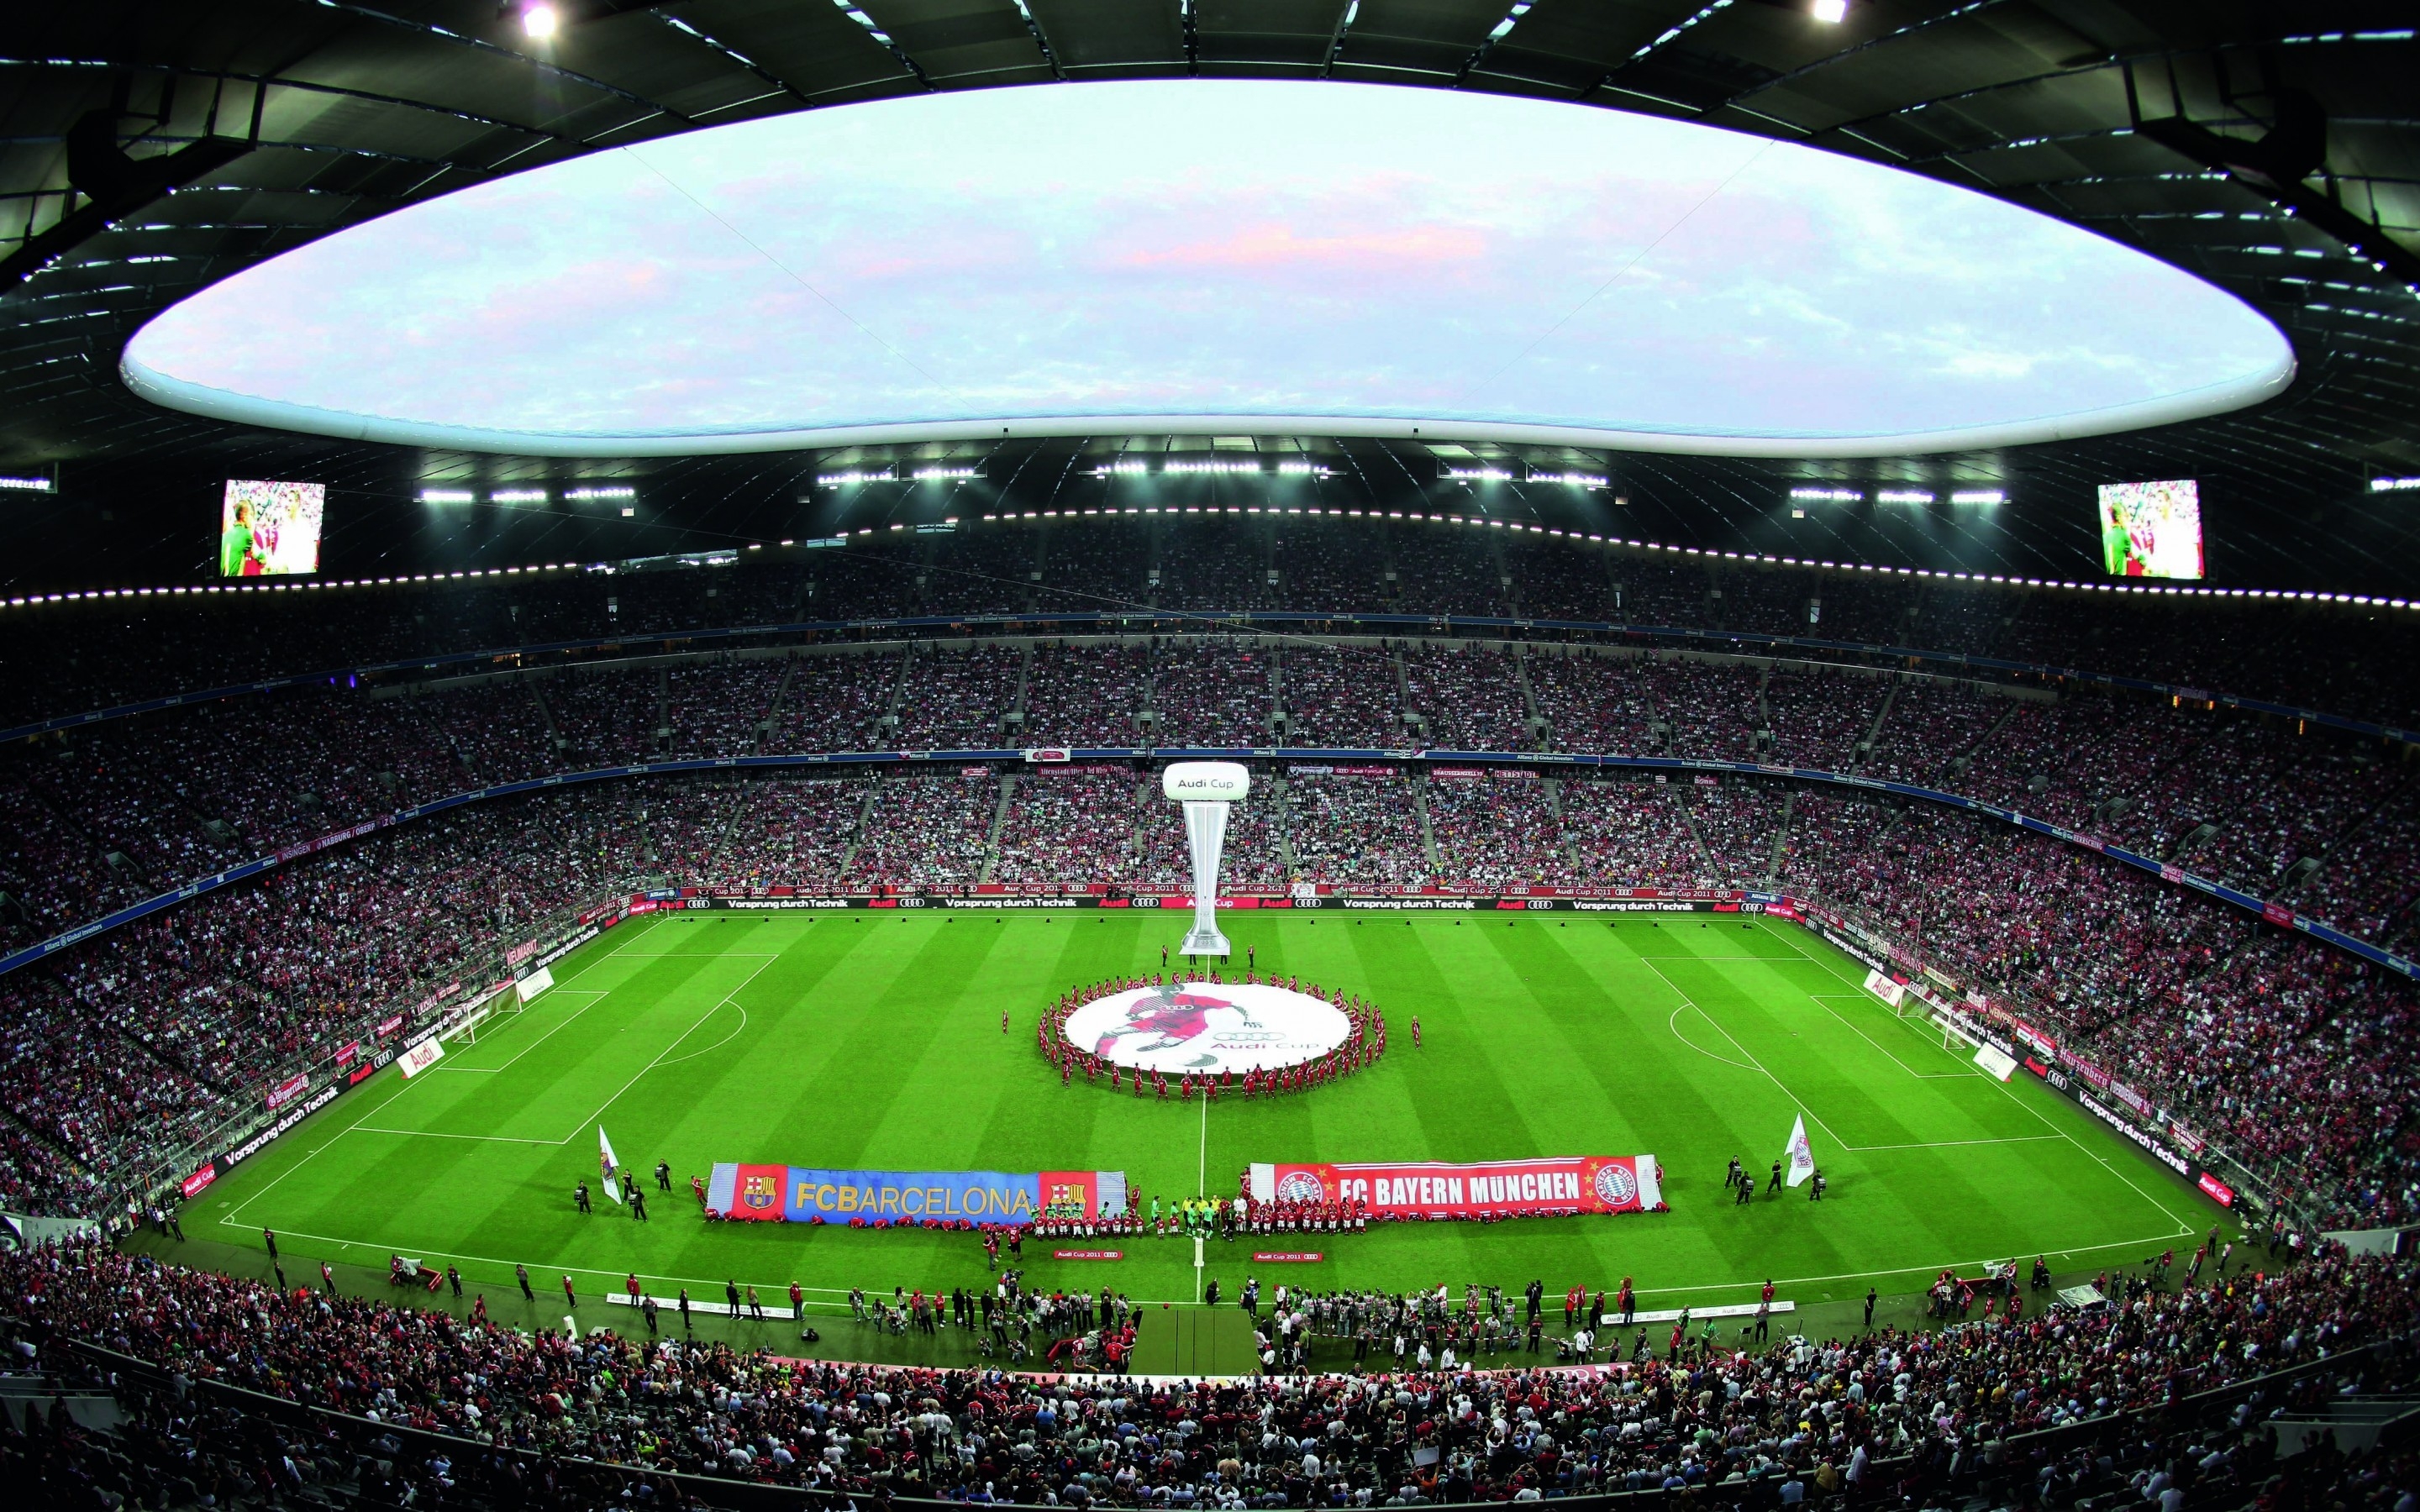 Barcelona vs Bayern Munich for 2880 x 1800 Retina Display resolution